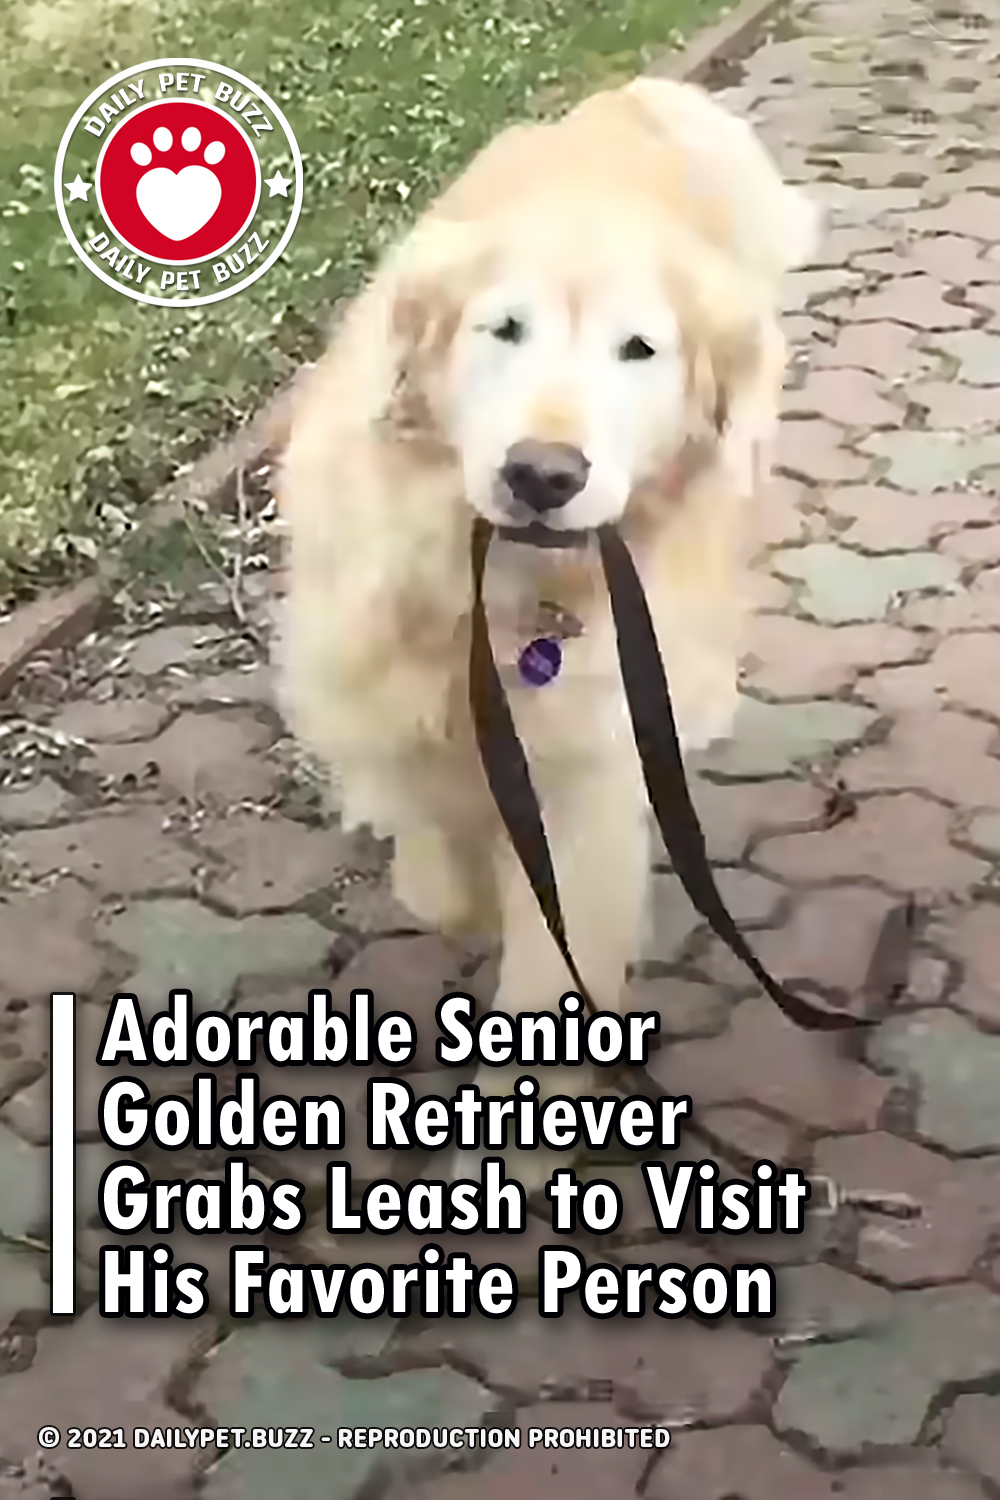 Adorable Senior Golden Retriever Grabs Leash to Visit His Favorite Person